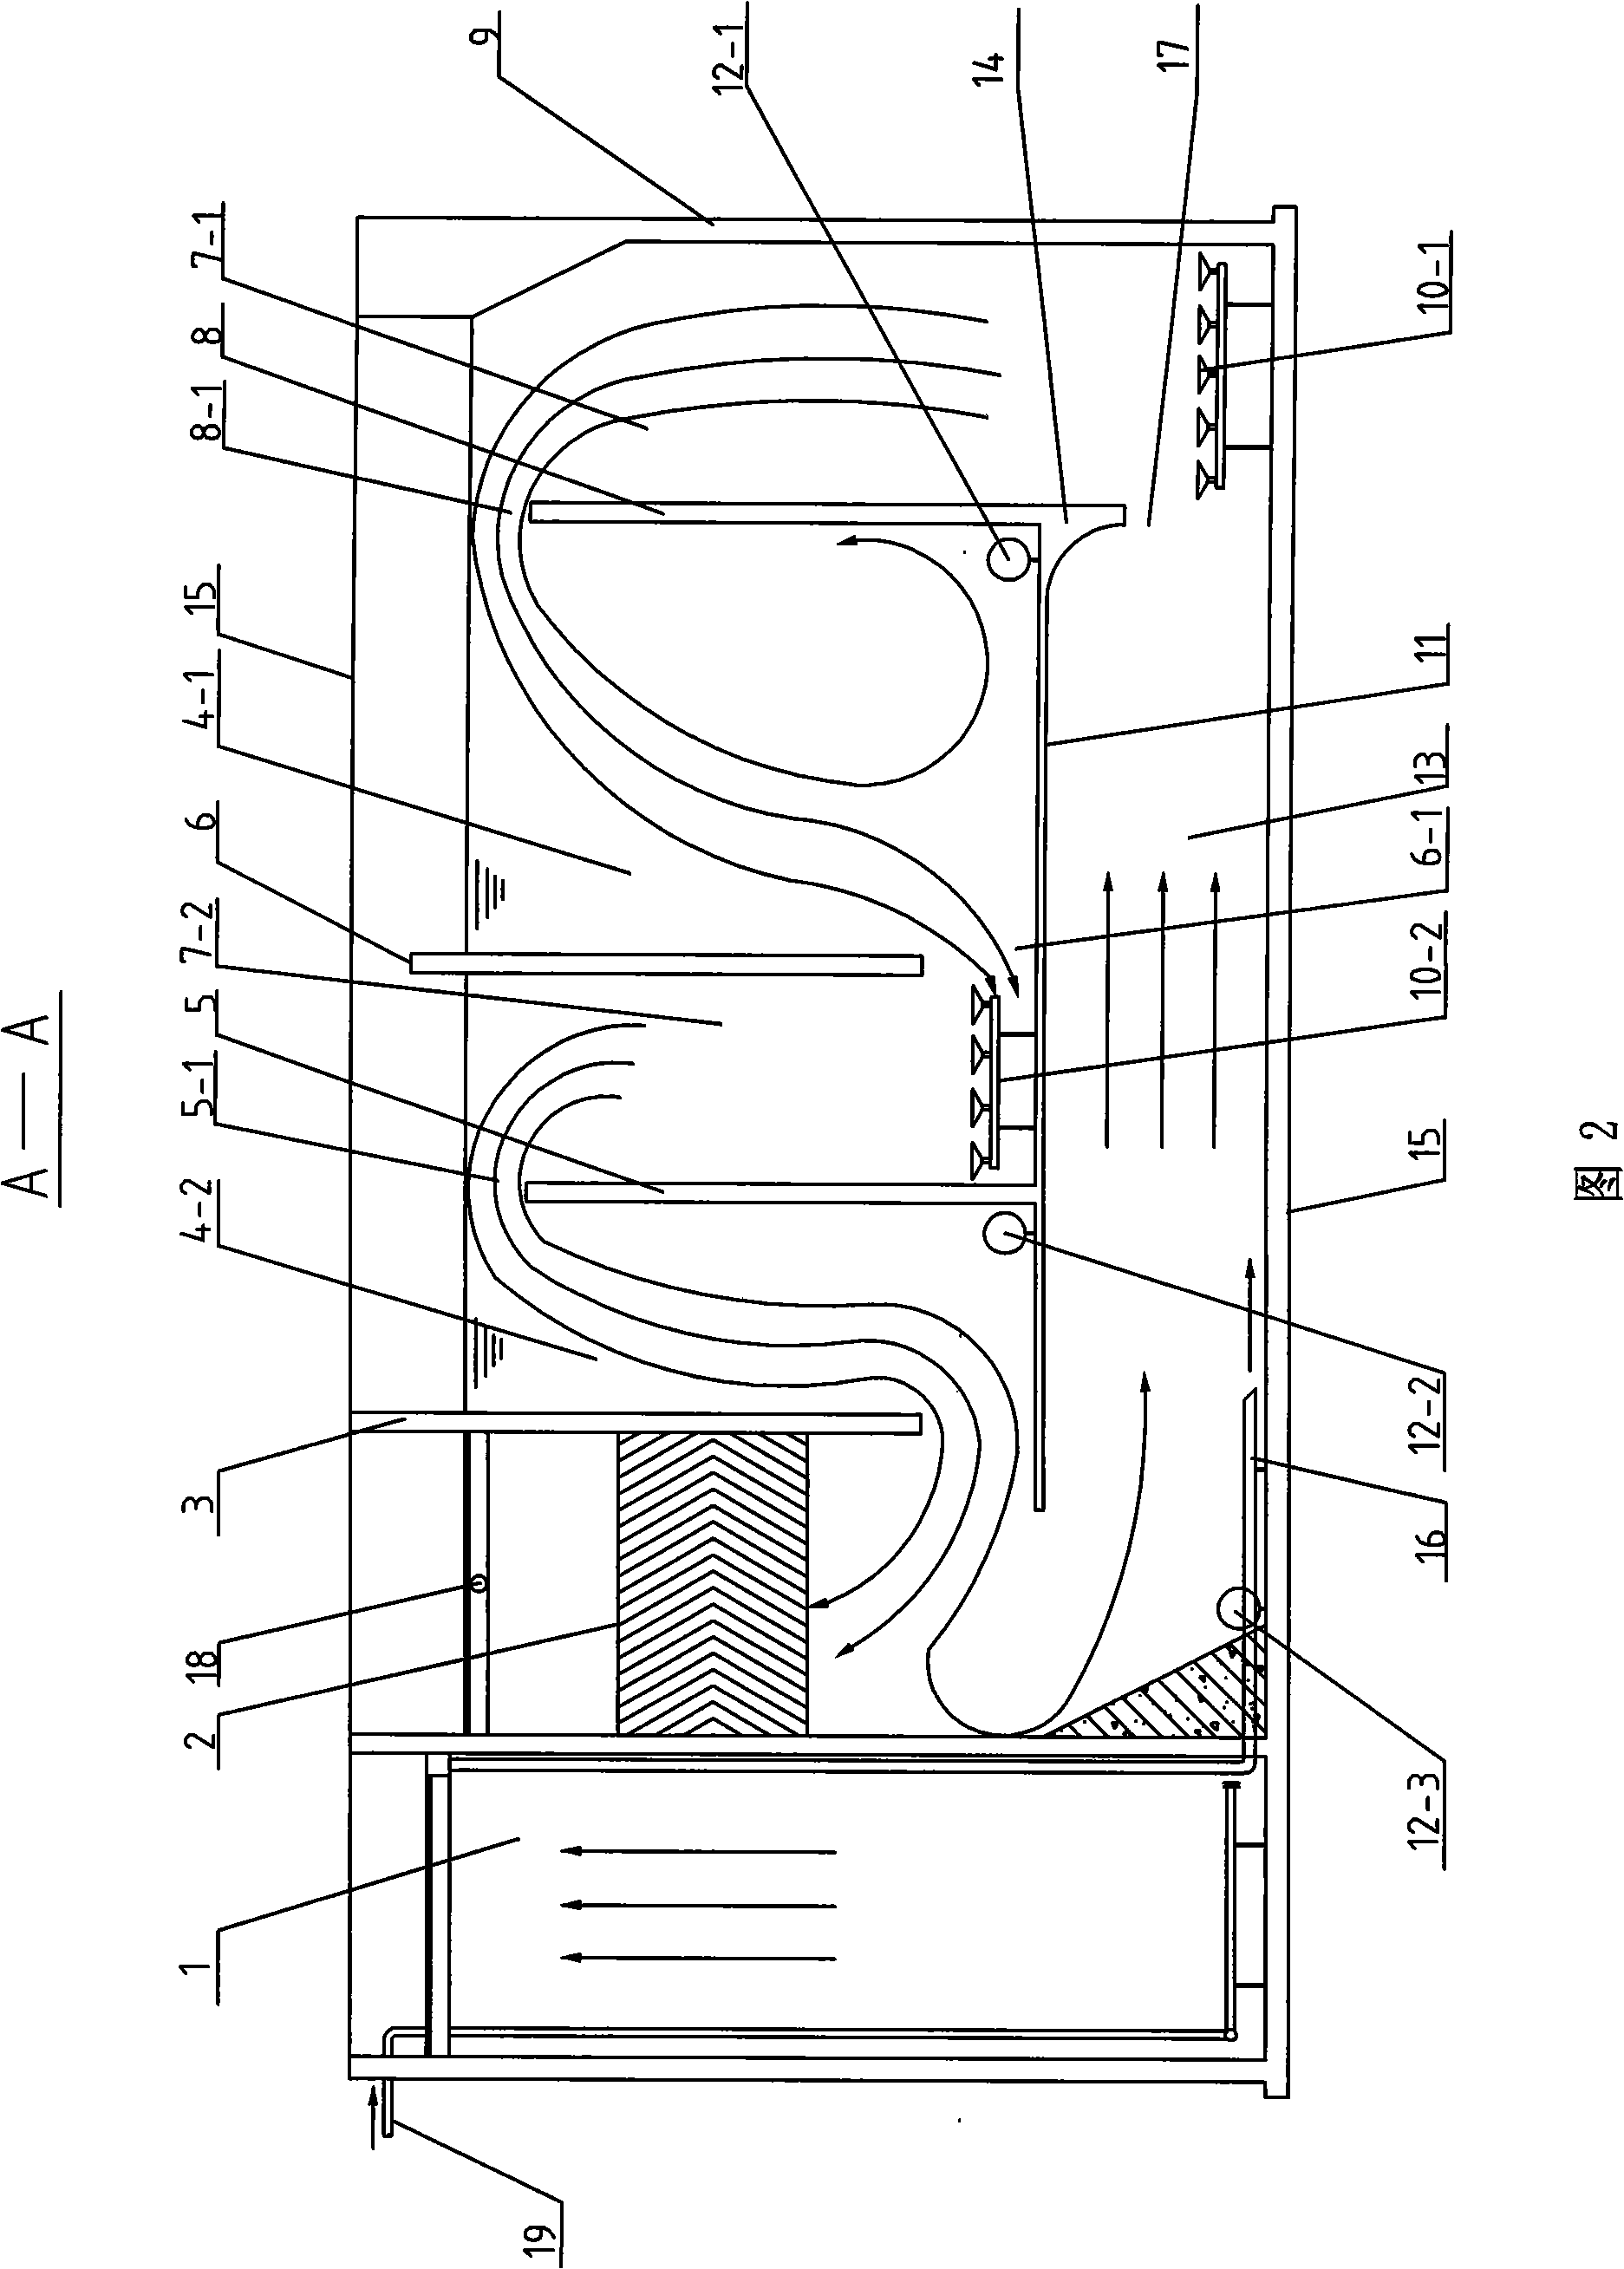 Zanjon type gas-lift stream-pull tridimensional circulation type integral co-construction oxidation ditch